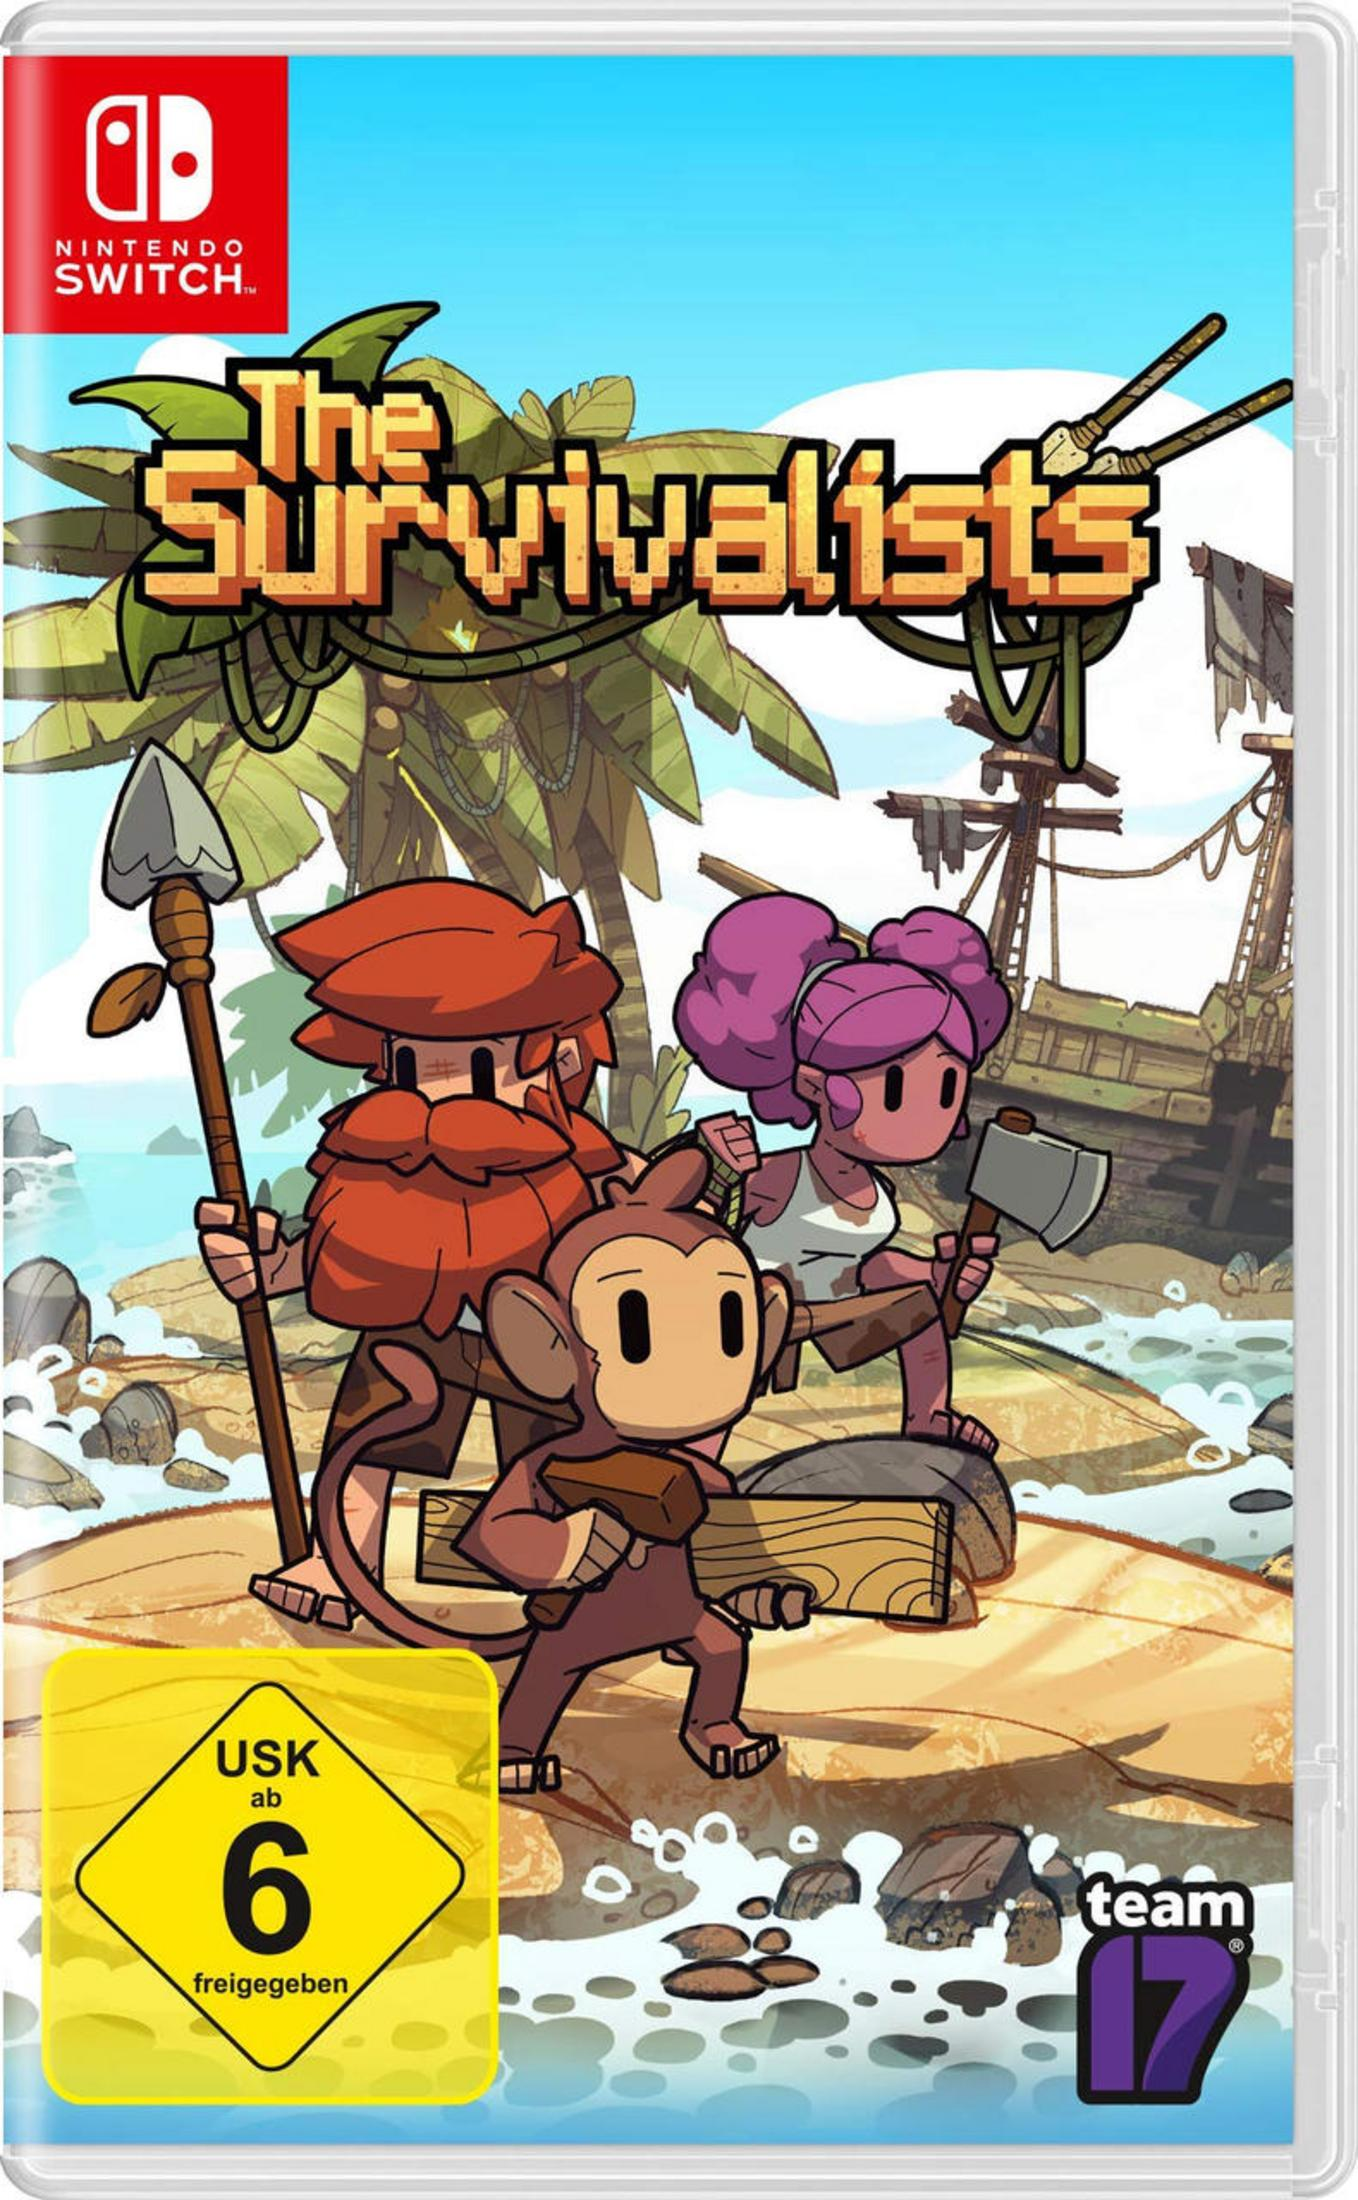 Survivalists - Switch Switch] [Nintendo